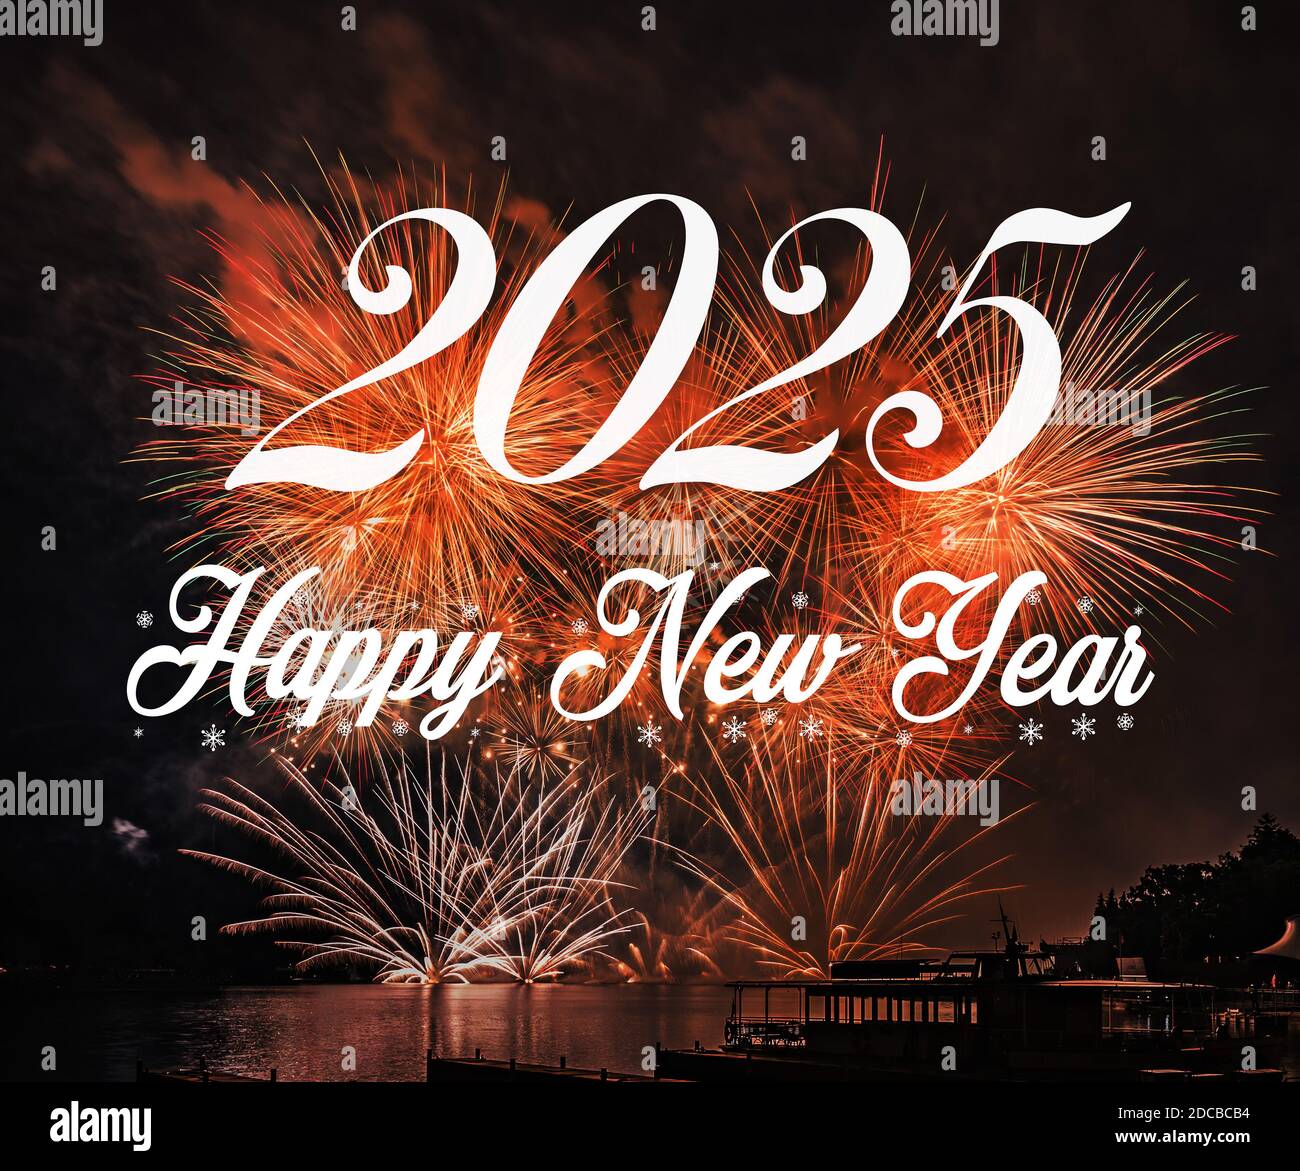 Happy new year 2025 with fireworks background. Celebration New Year 2025 Stock Photo